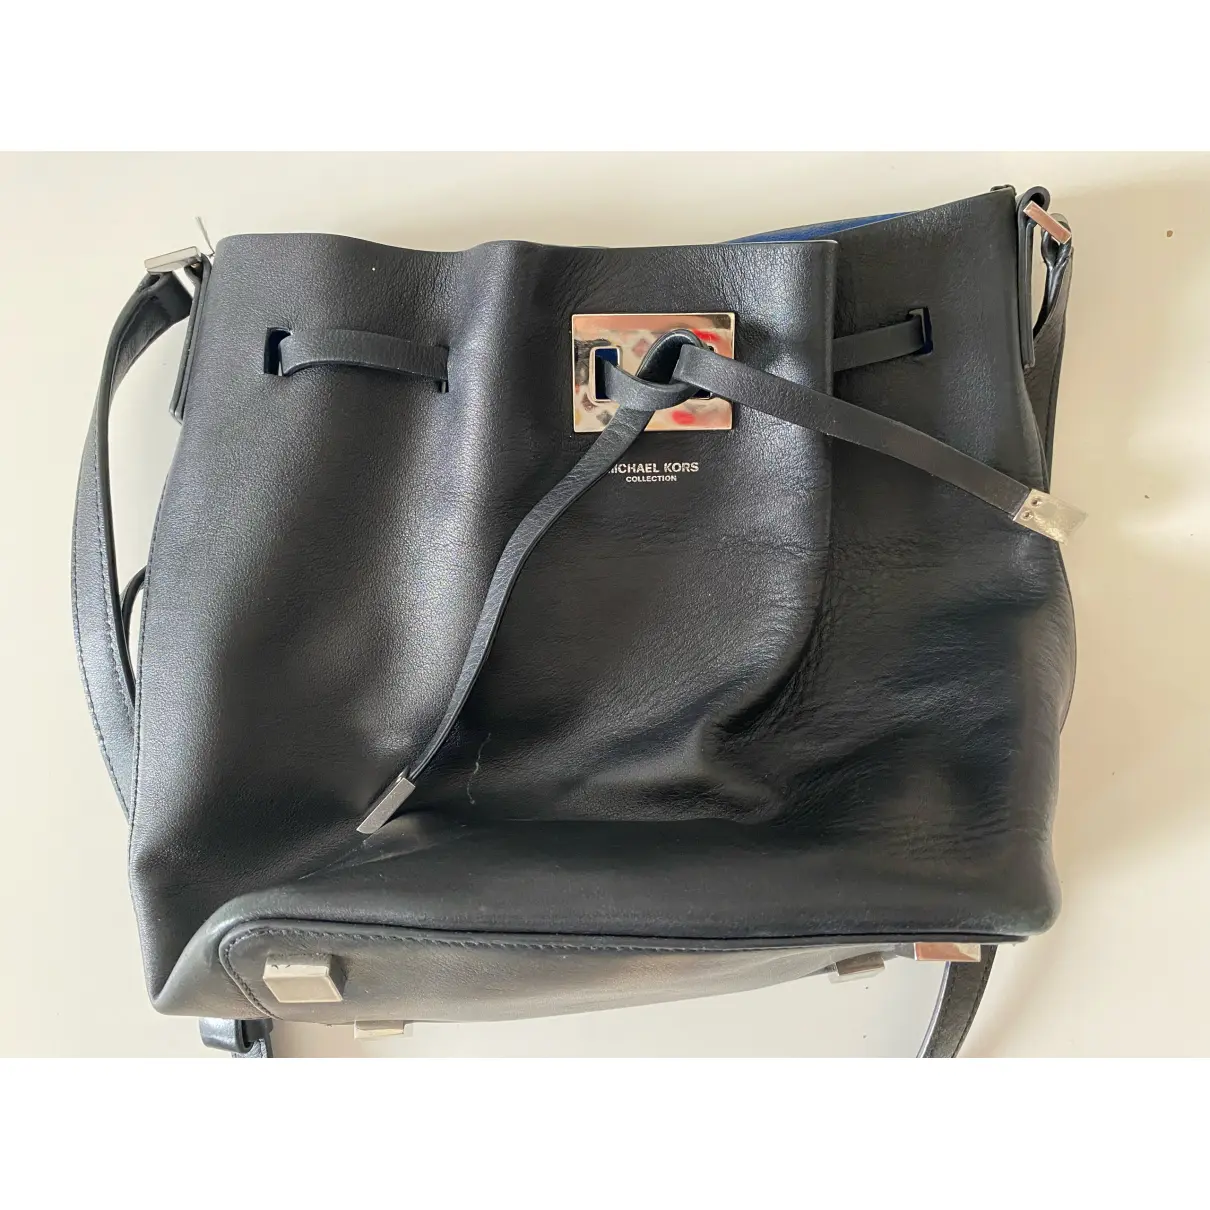 Elie leather handbag Michael Kors